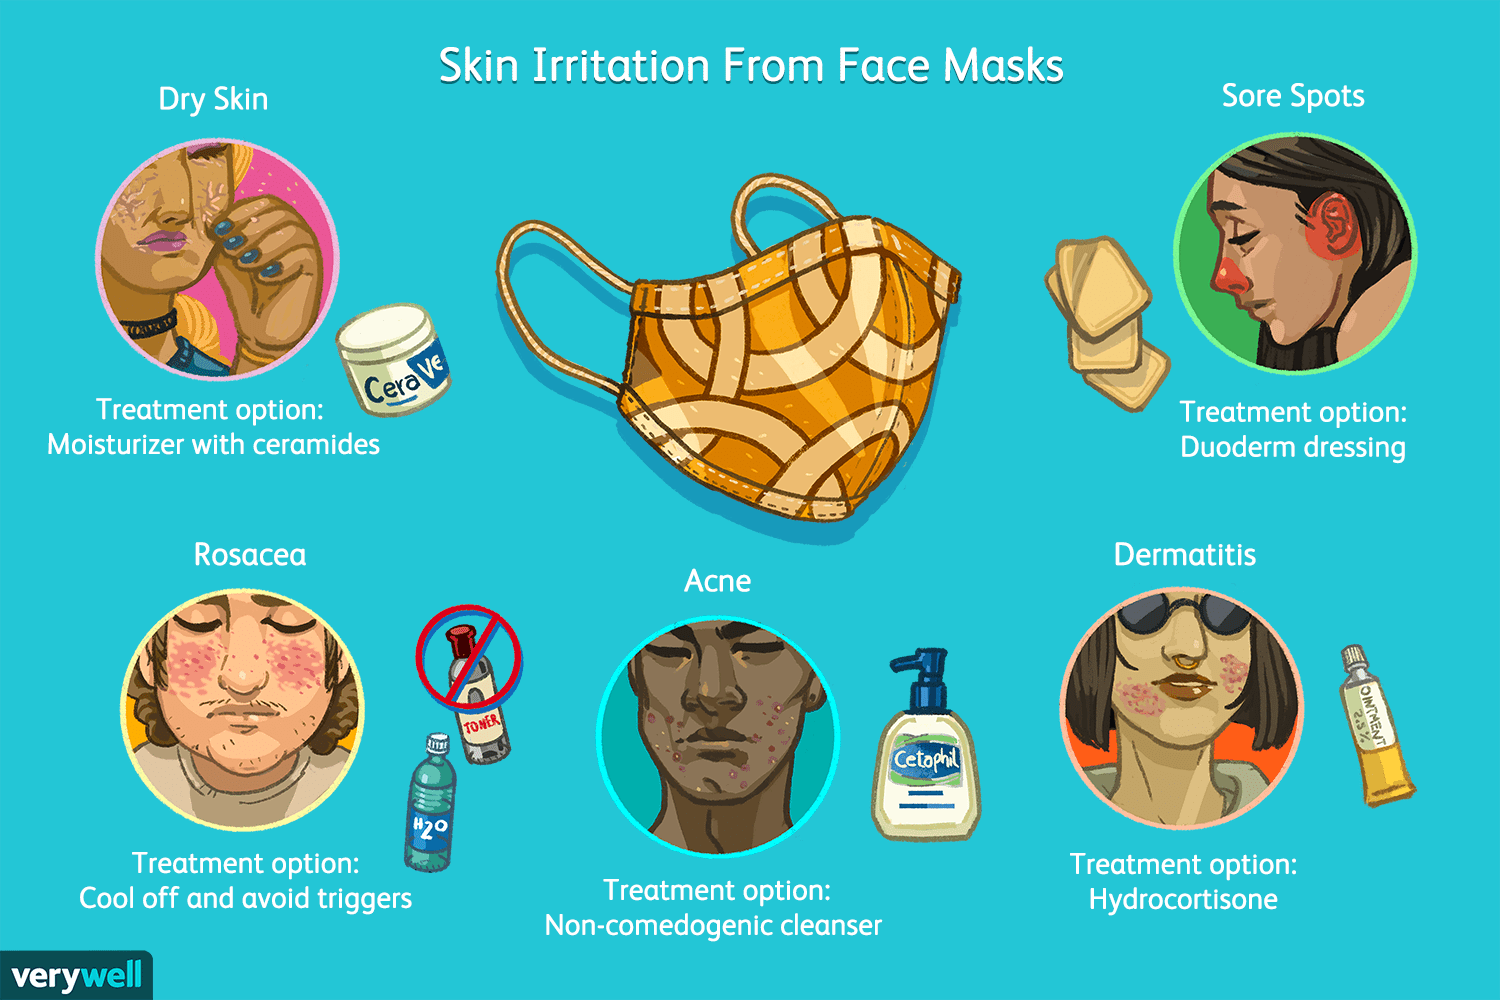 face-mask-skin-irritation-4843754-ADD-FINAL-1b6790c947ea423c8941623cc0873cbf.png